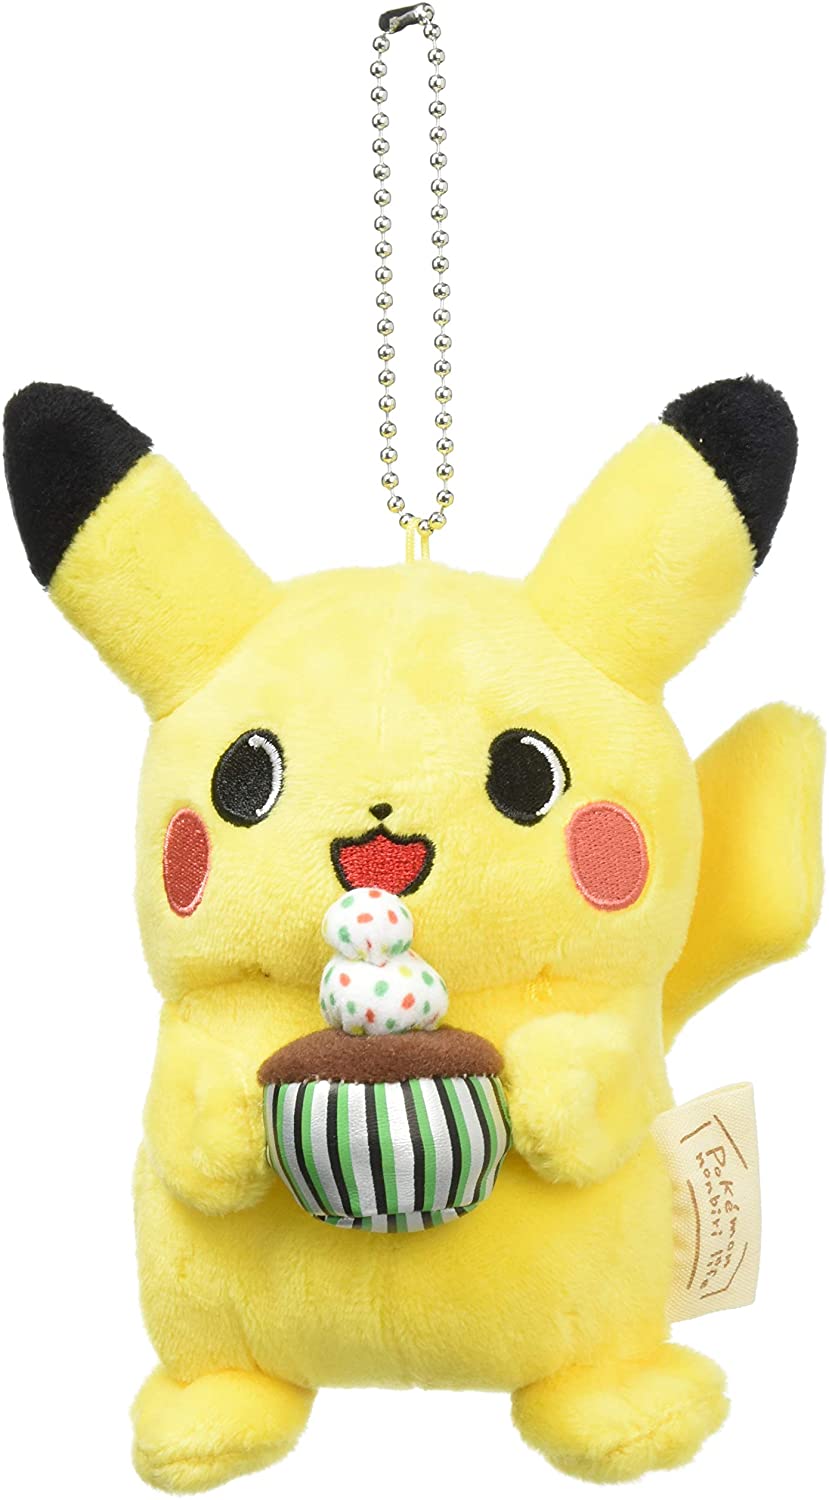 Pokemon - Pikachu - Plush Mascot - Pokemon Leisure Life (Pokemon Center)